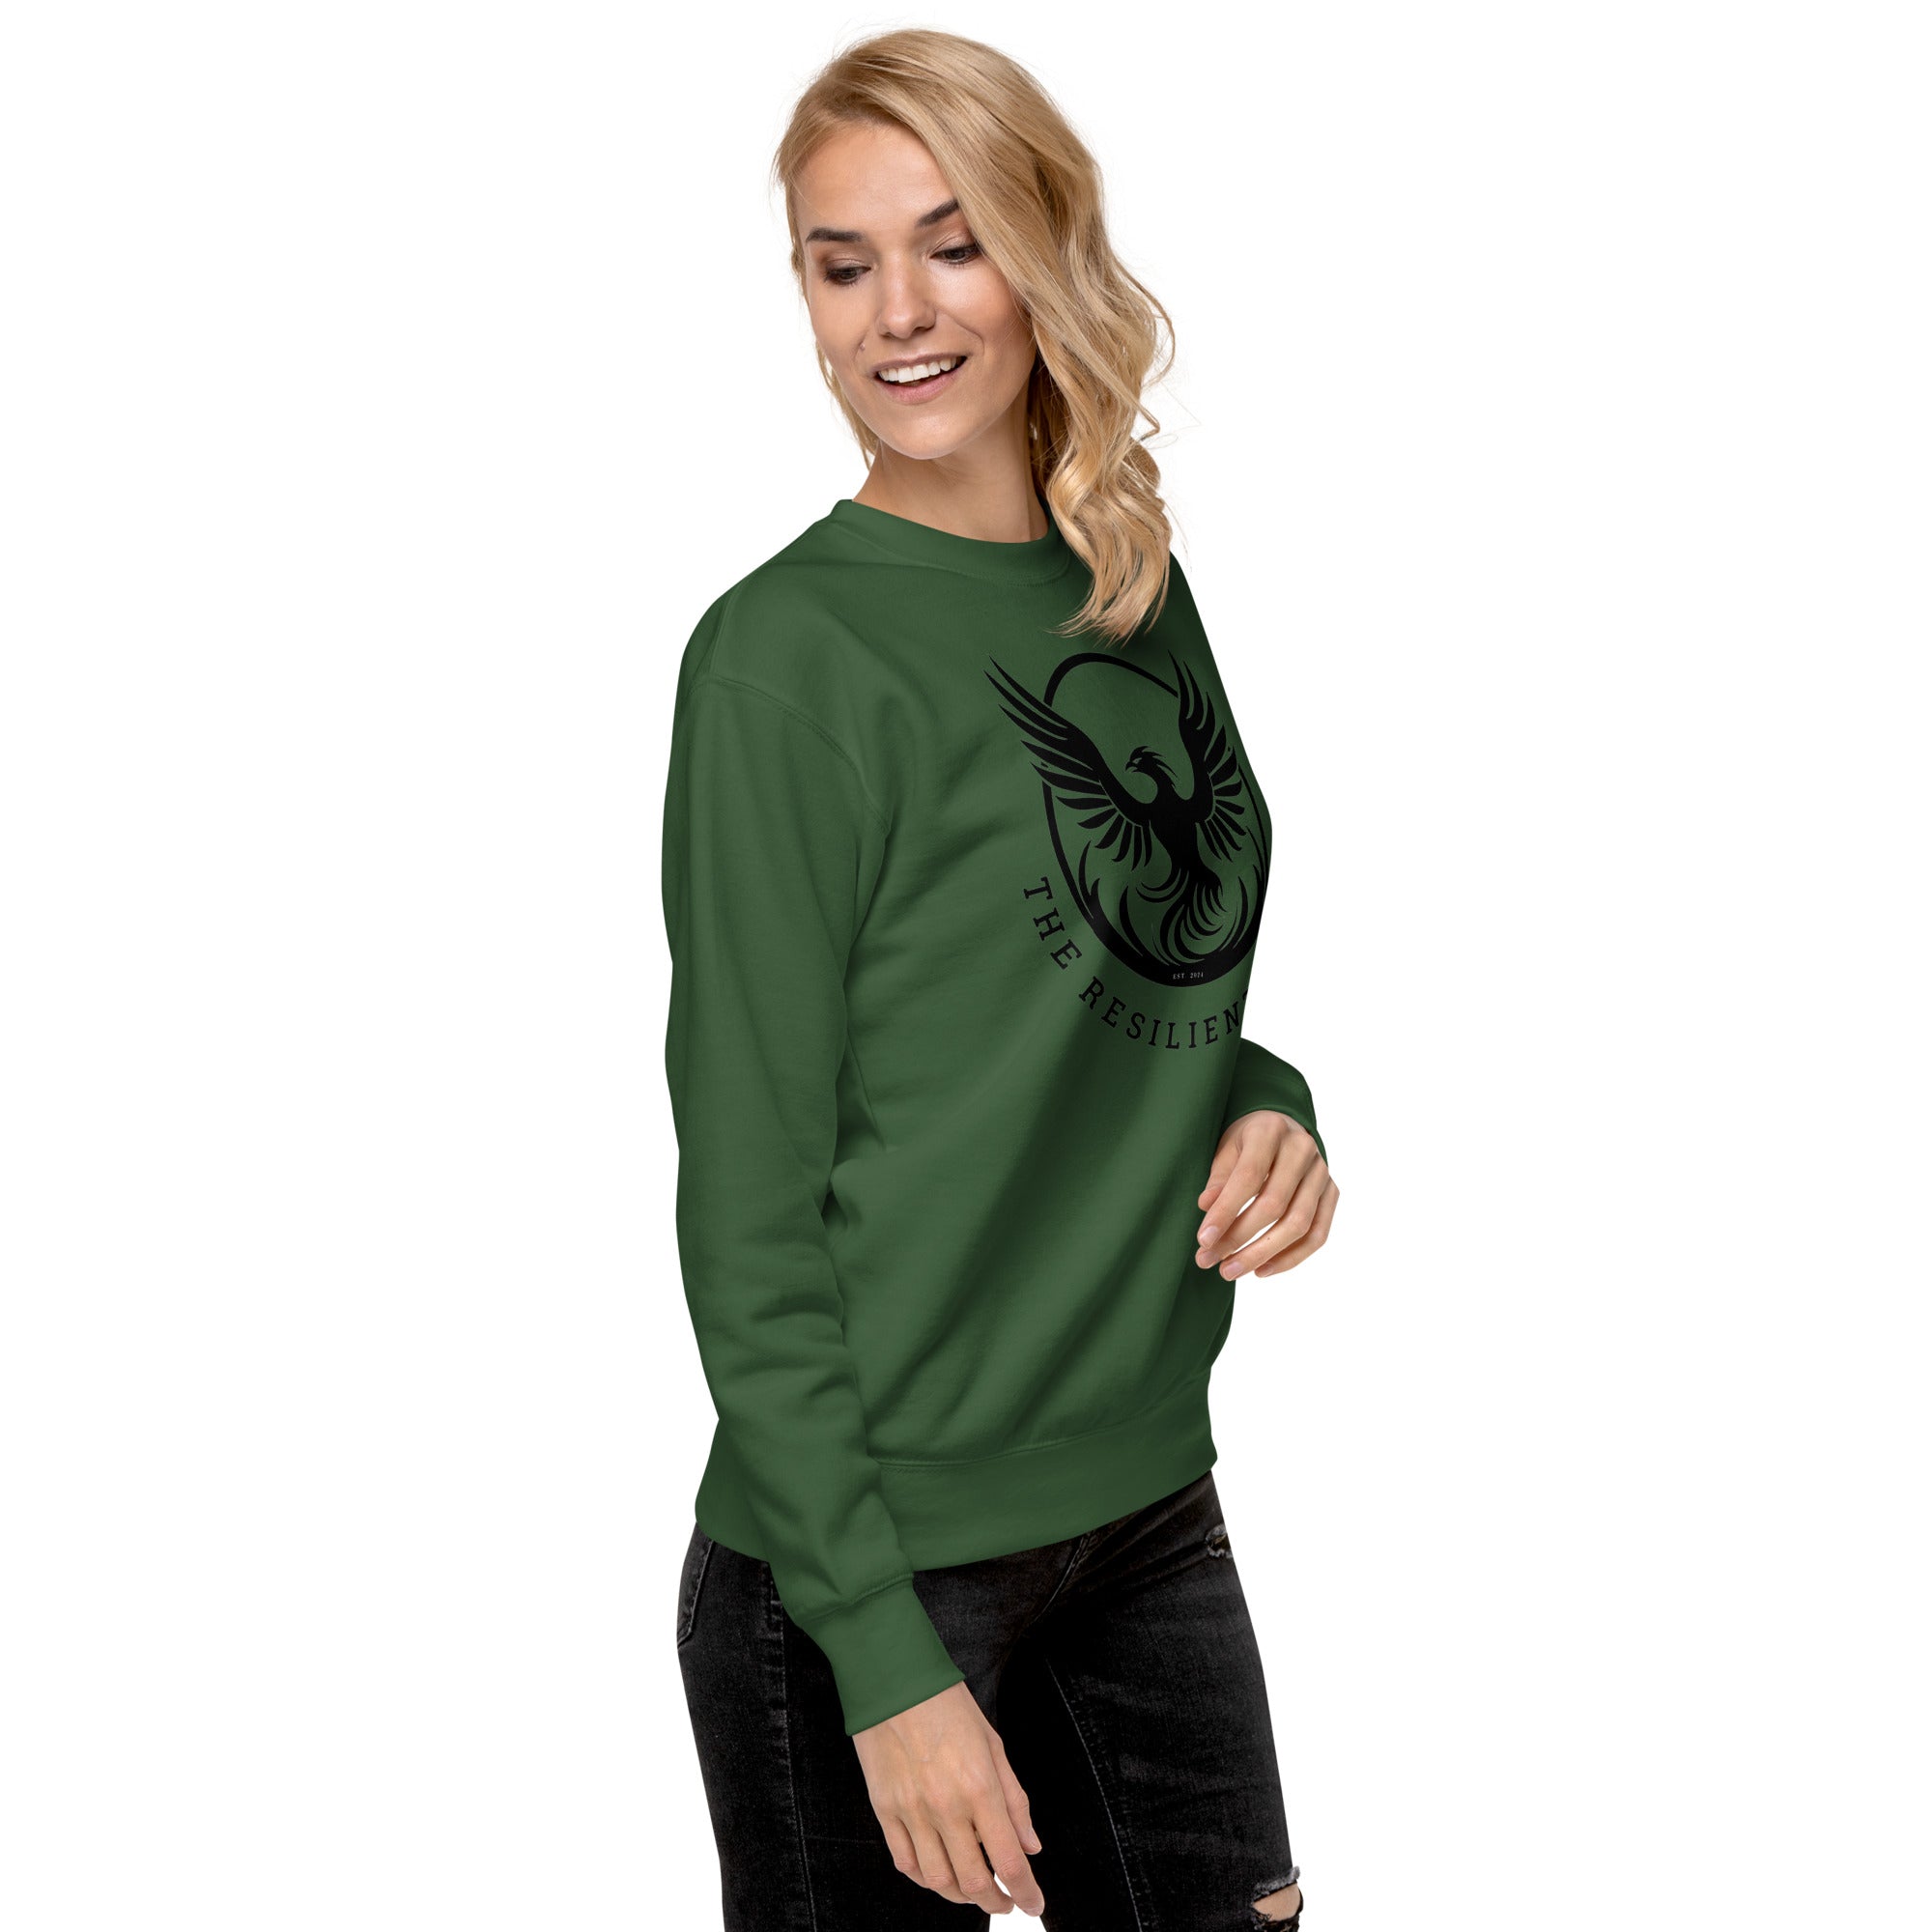 The Resilient Soul Unisex Premium Sweatshirt - My Store